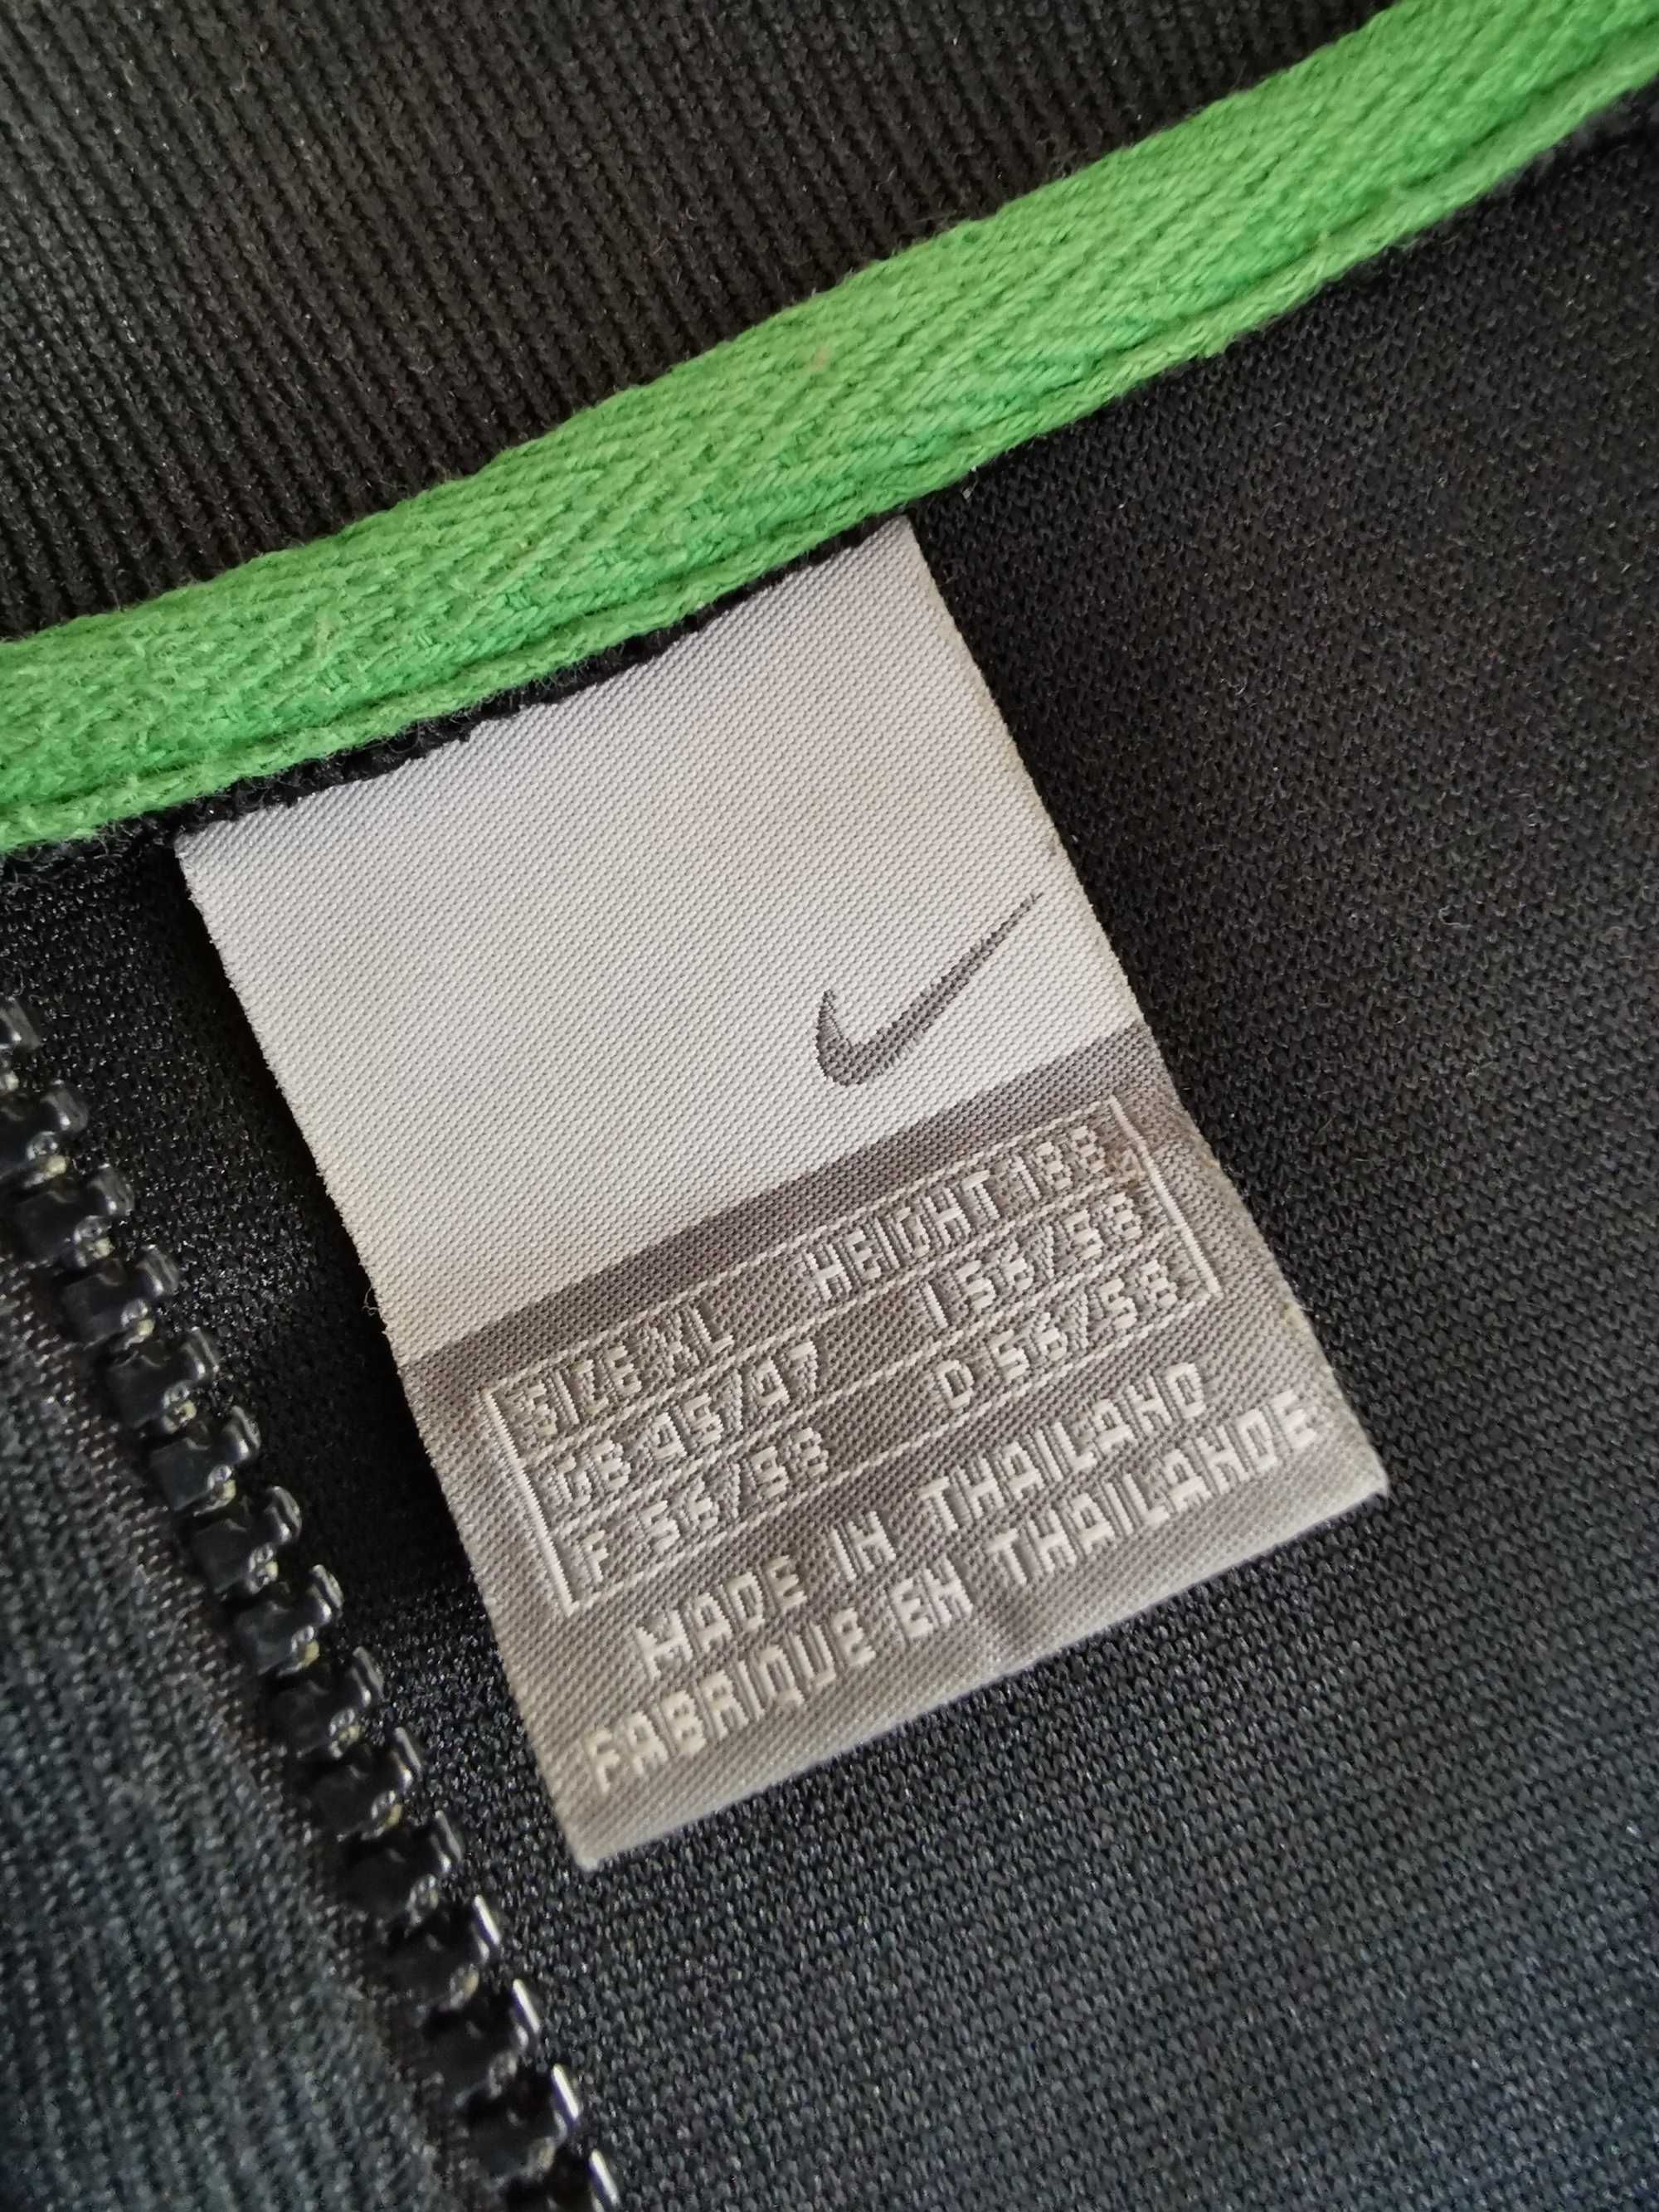 Bluza piłkarska Celtic Glasgow Nike XL gruba